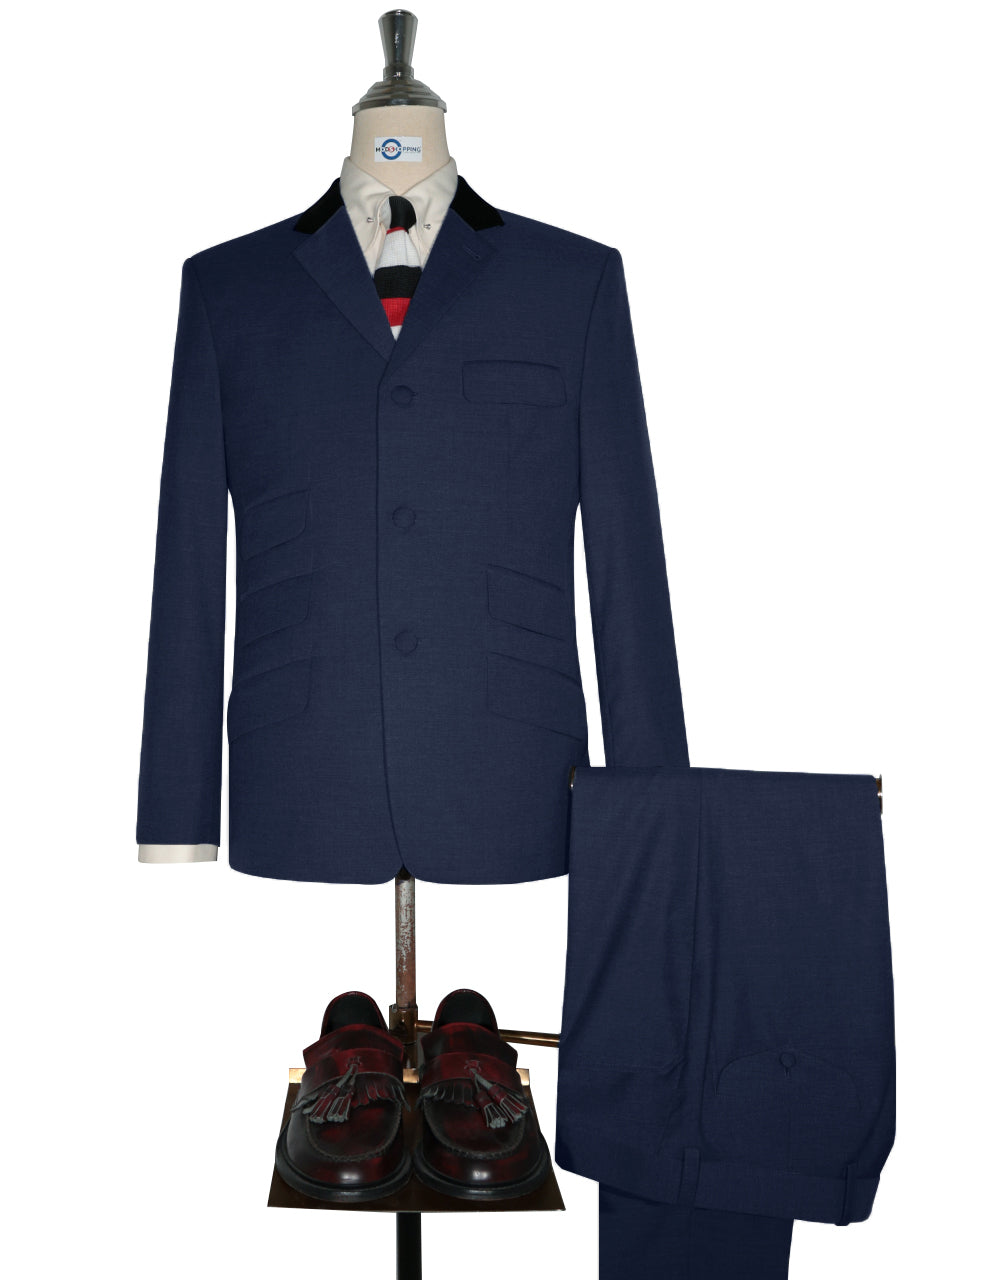 MADCAP ENGLAND Mod 3 Button Dogtooth Suit Jacket Berry